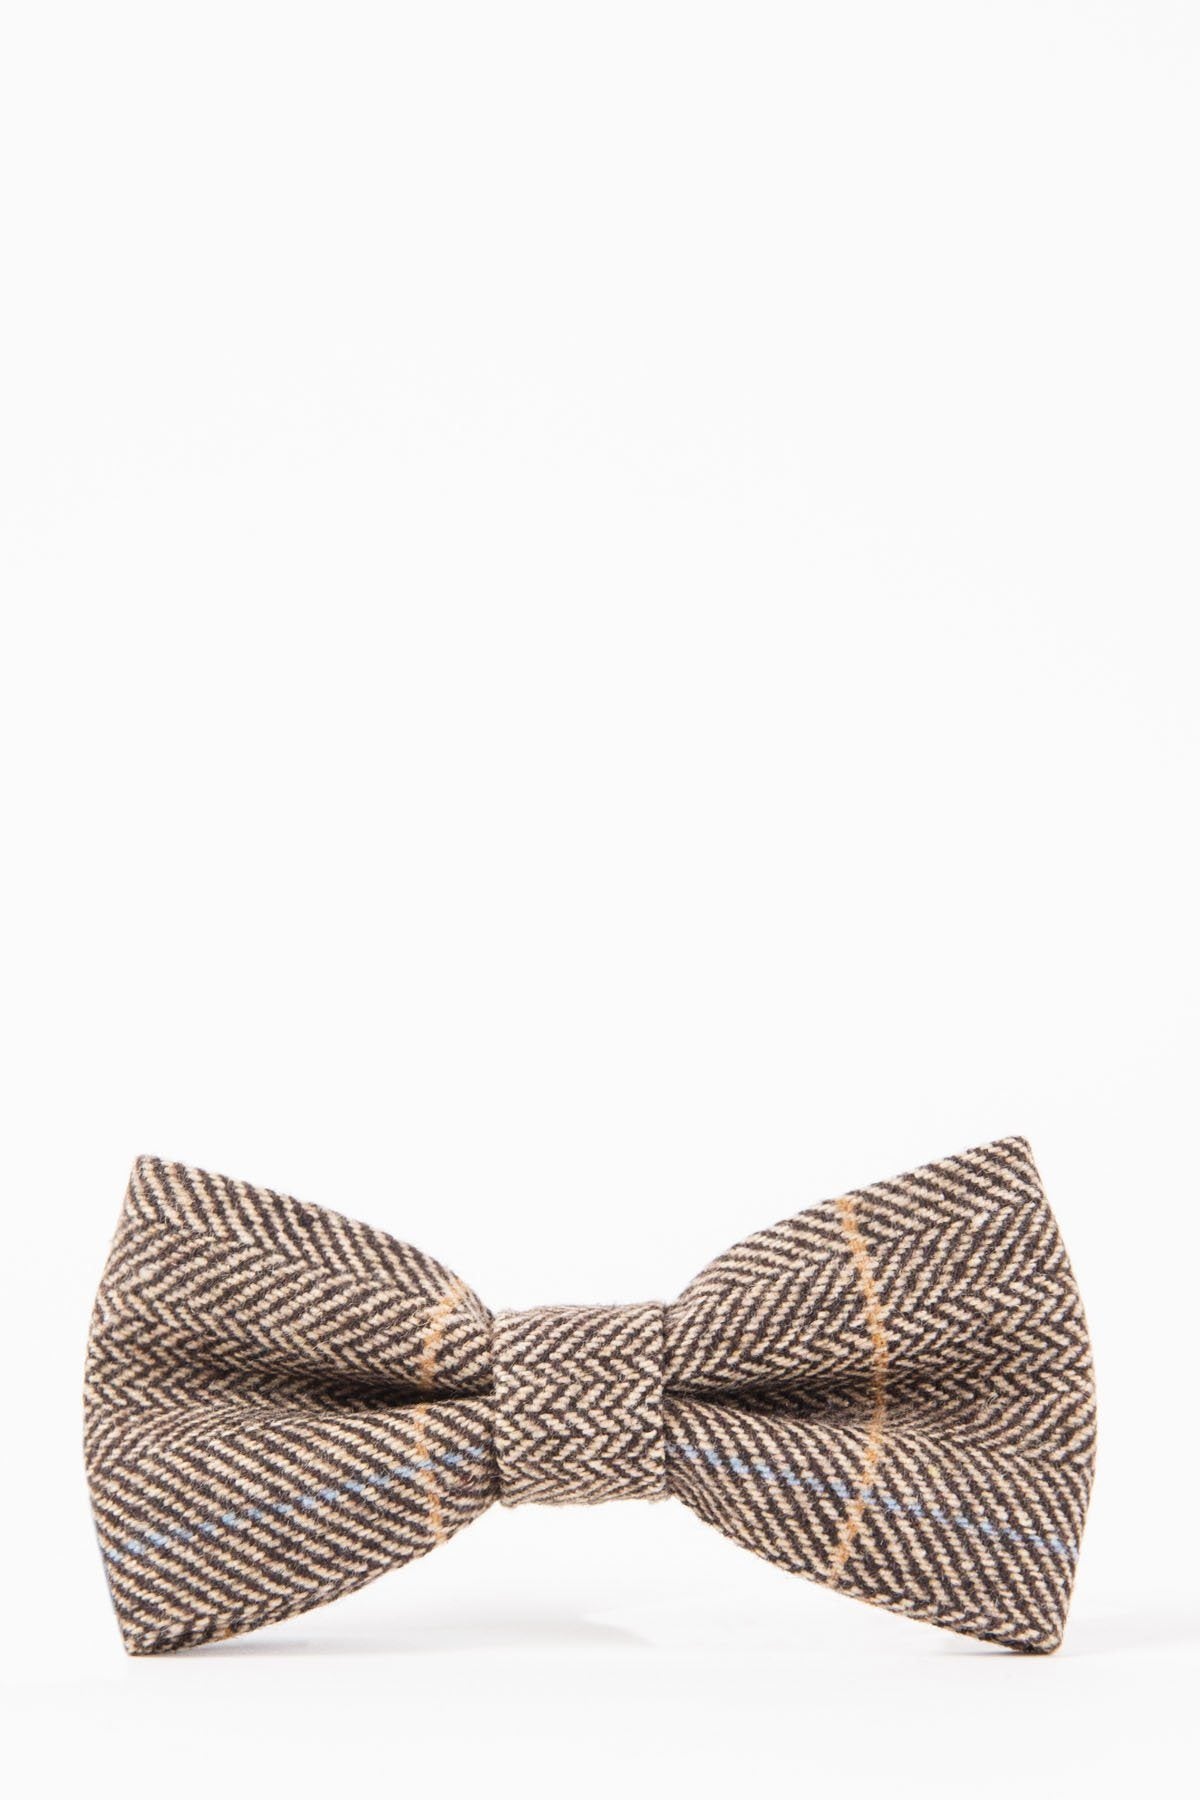 Dx7 Tan bow tie